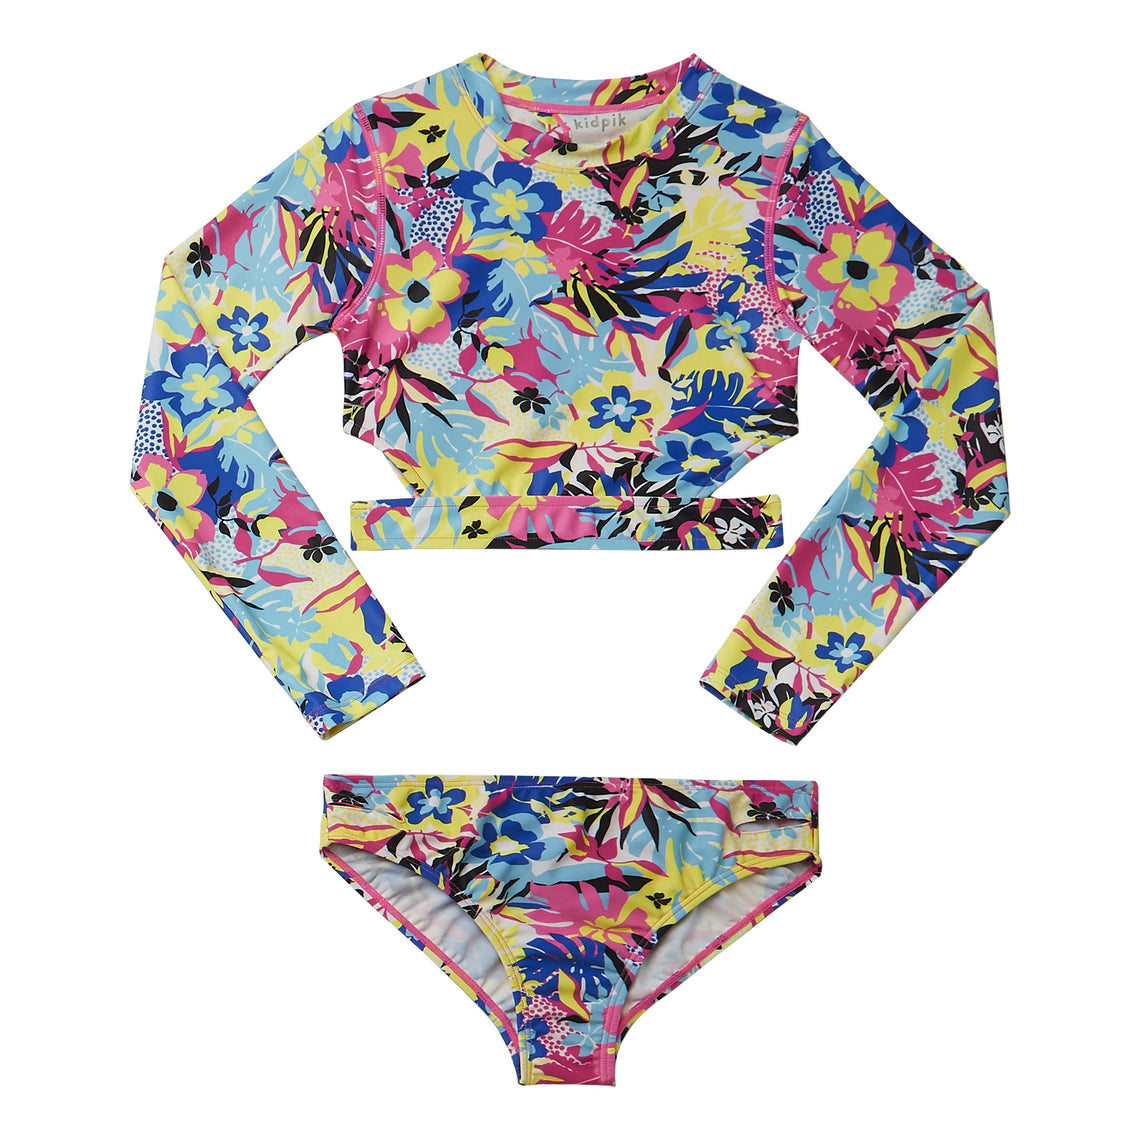 KIDPIK Girls Flower Rash Guard Swimsuit, Size: XXS (4) - XXL (16) – Kidpik